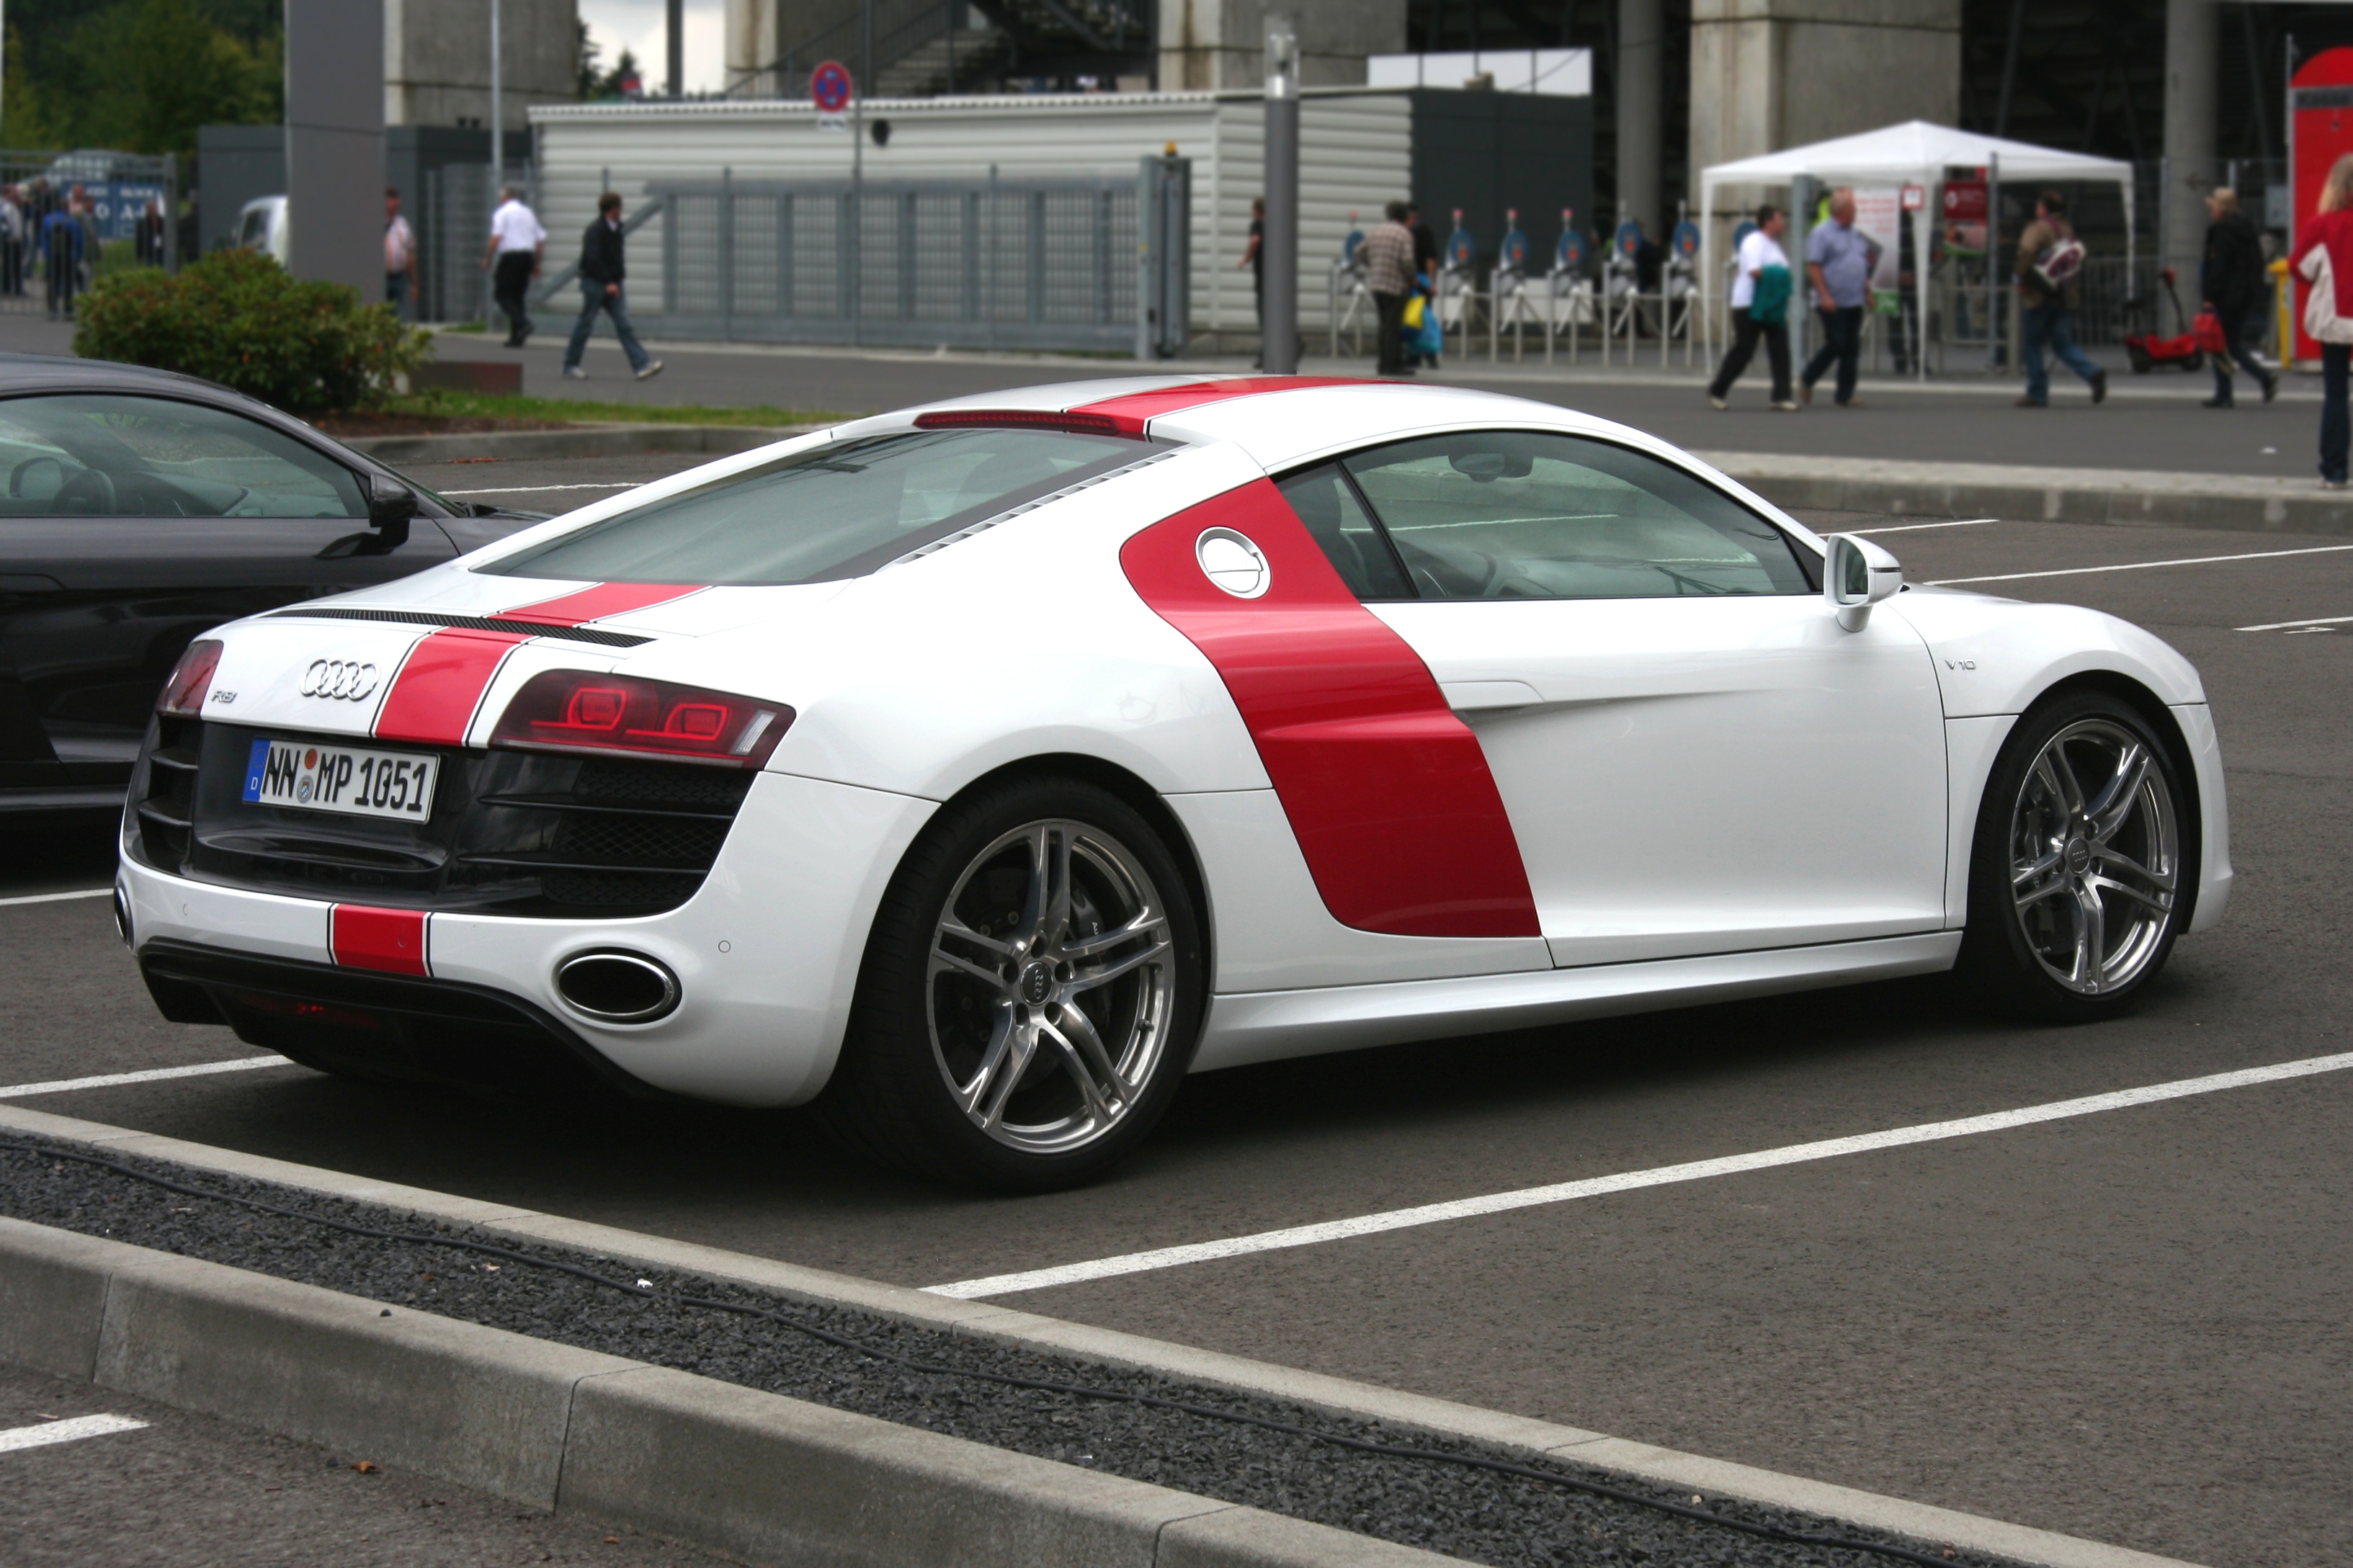 File:Audi R8 V10, Bj. 2011, Heck (2011-08-13 Sp).JPG - Wikimedia Commons